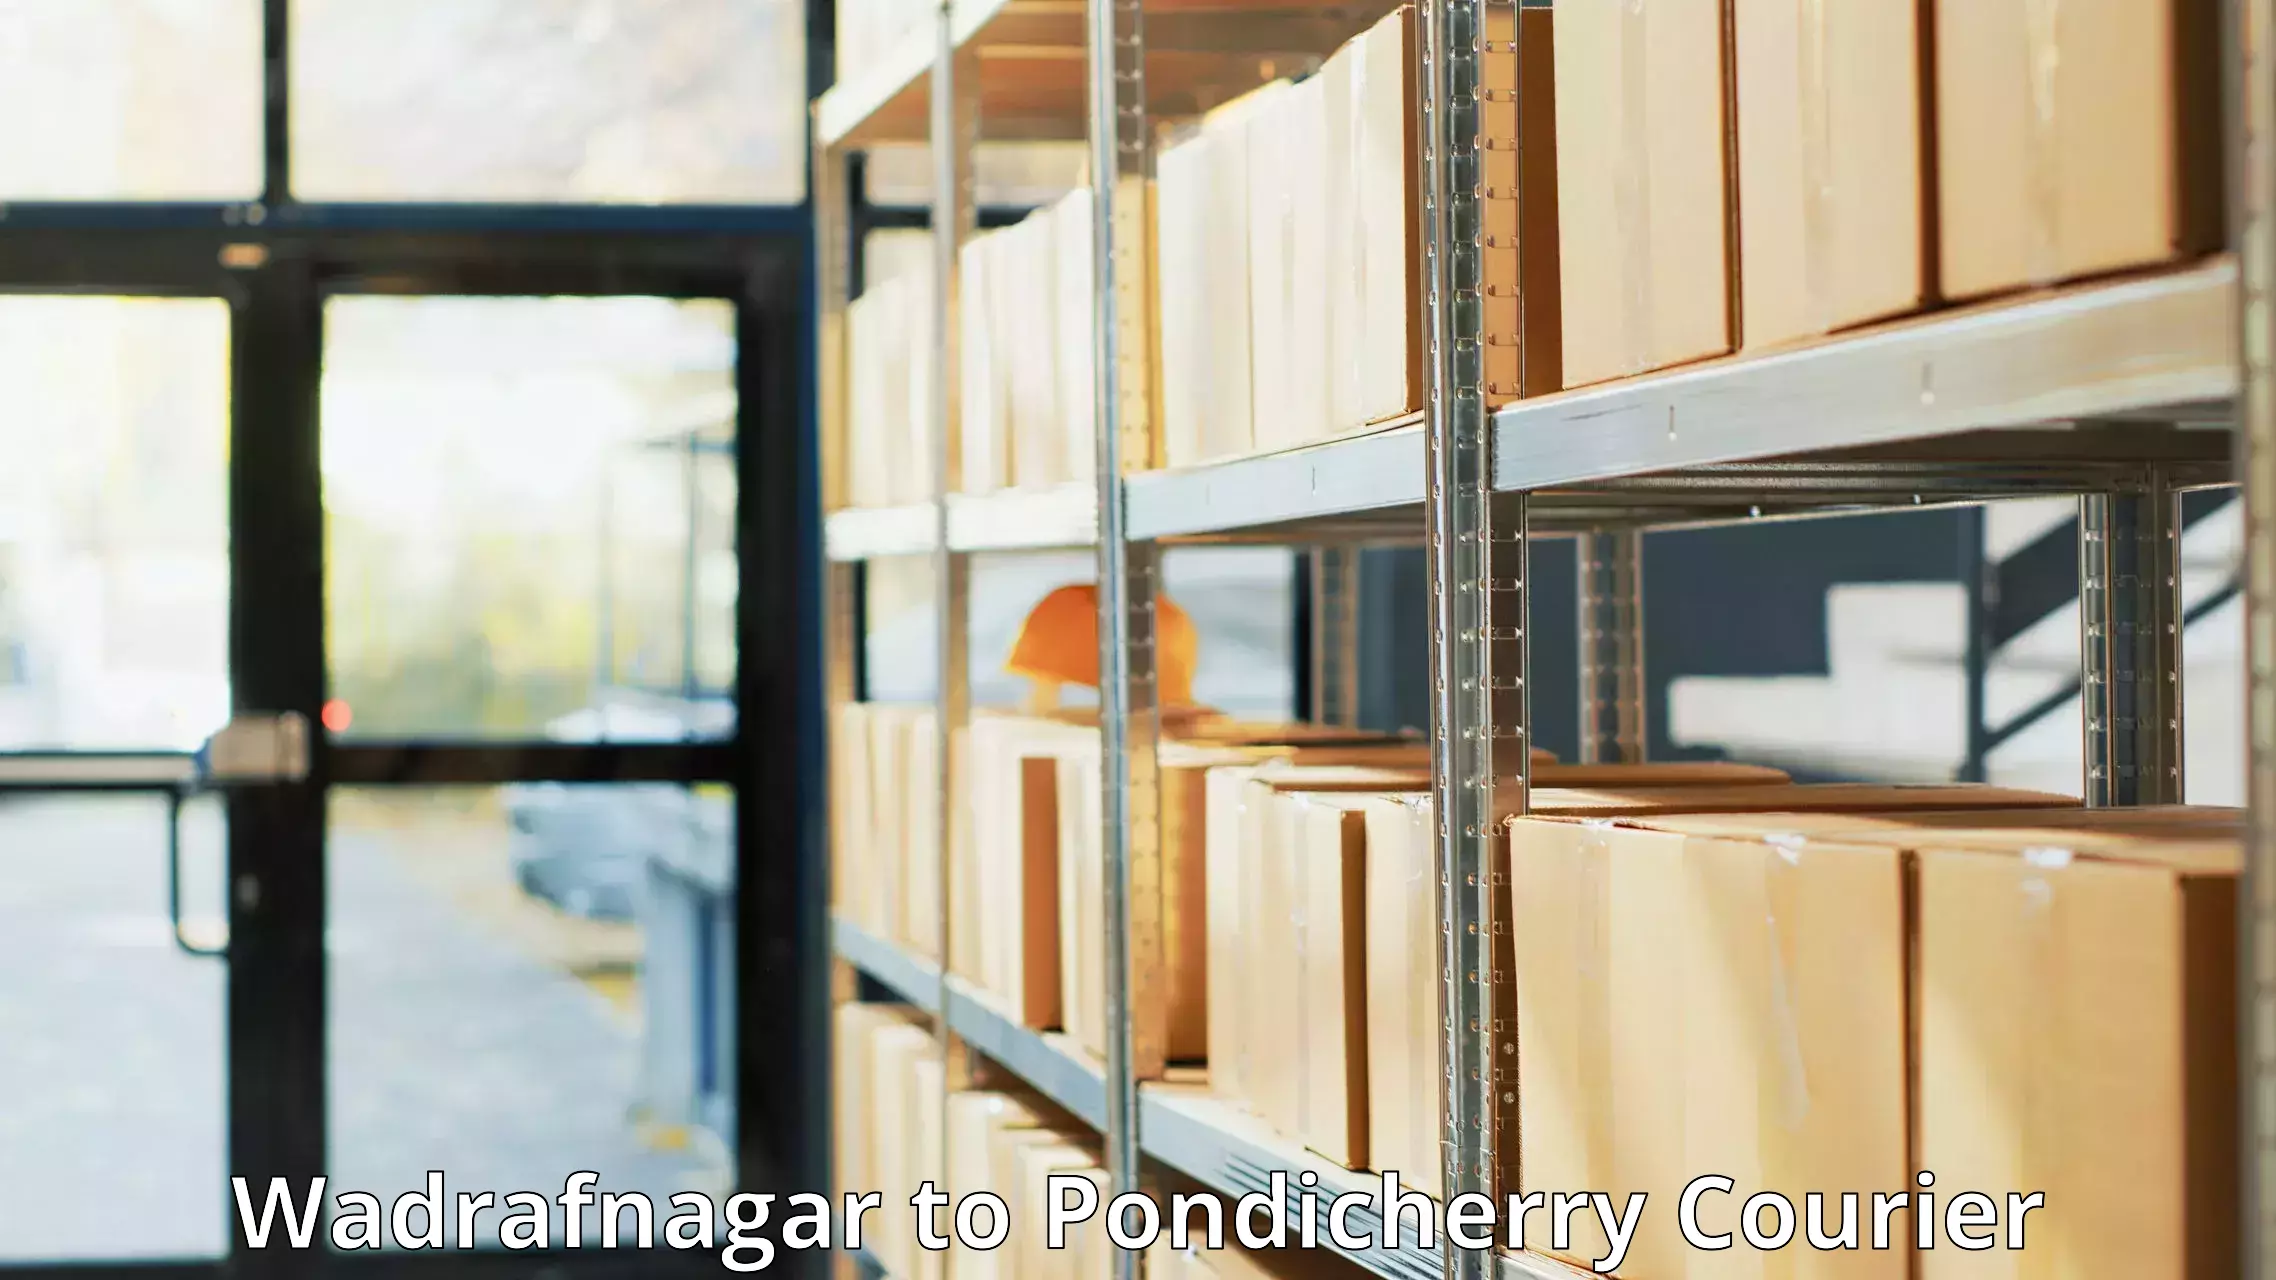 Professional courier handling Wadrafnagar to Metttupalayam